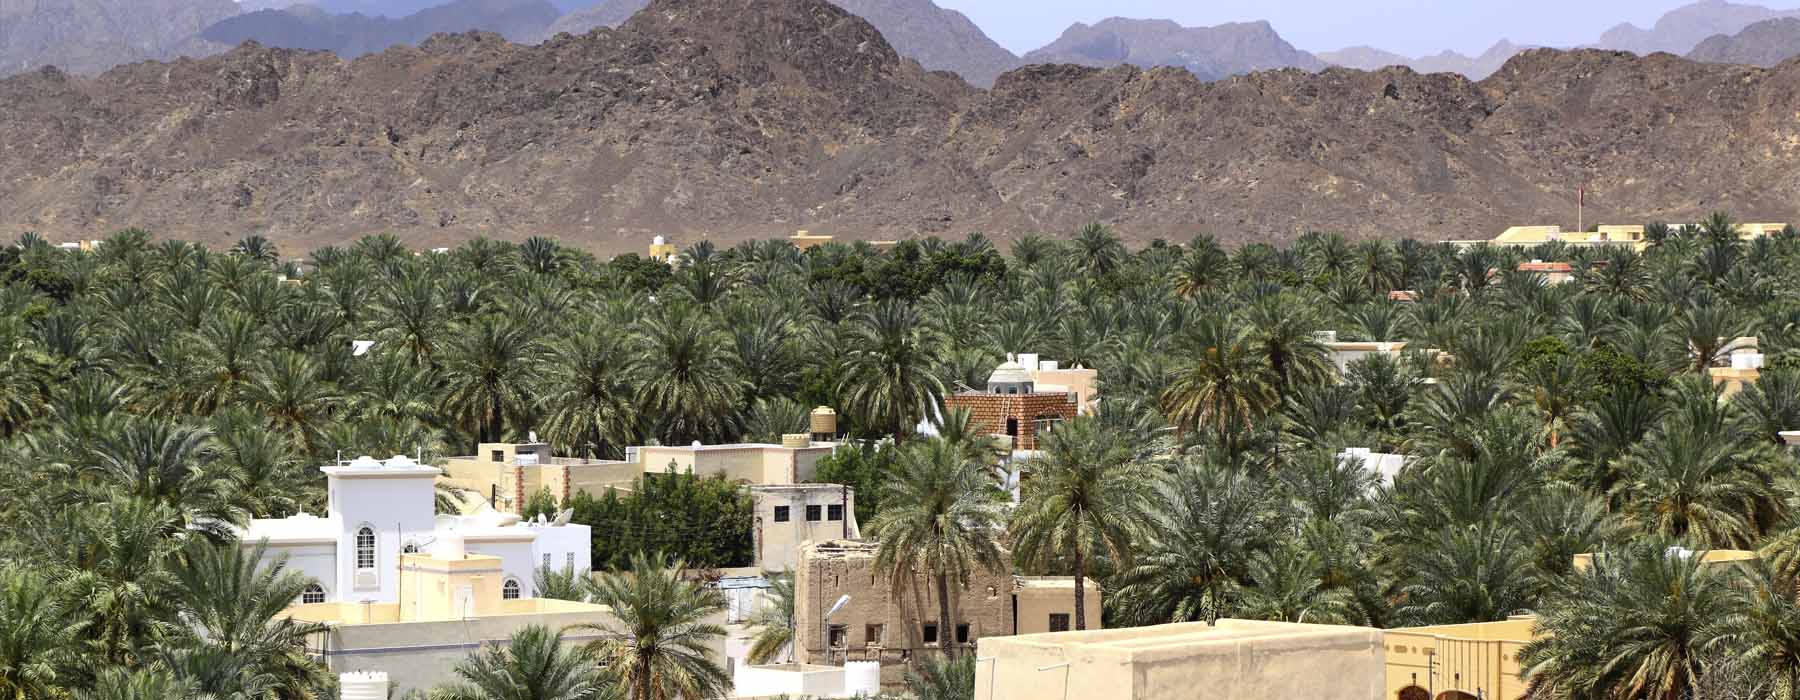 All our Oman<br class="hidden-md hidden-lg" /> Couples Holidays